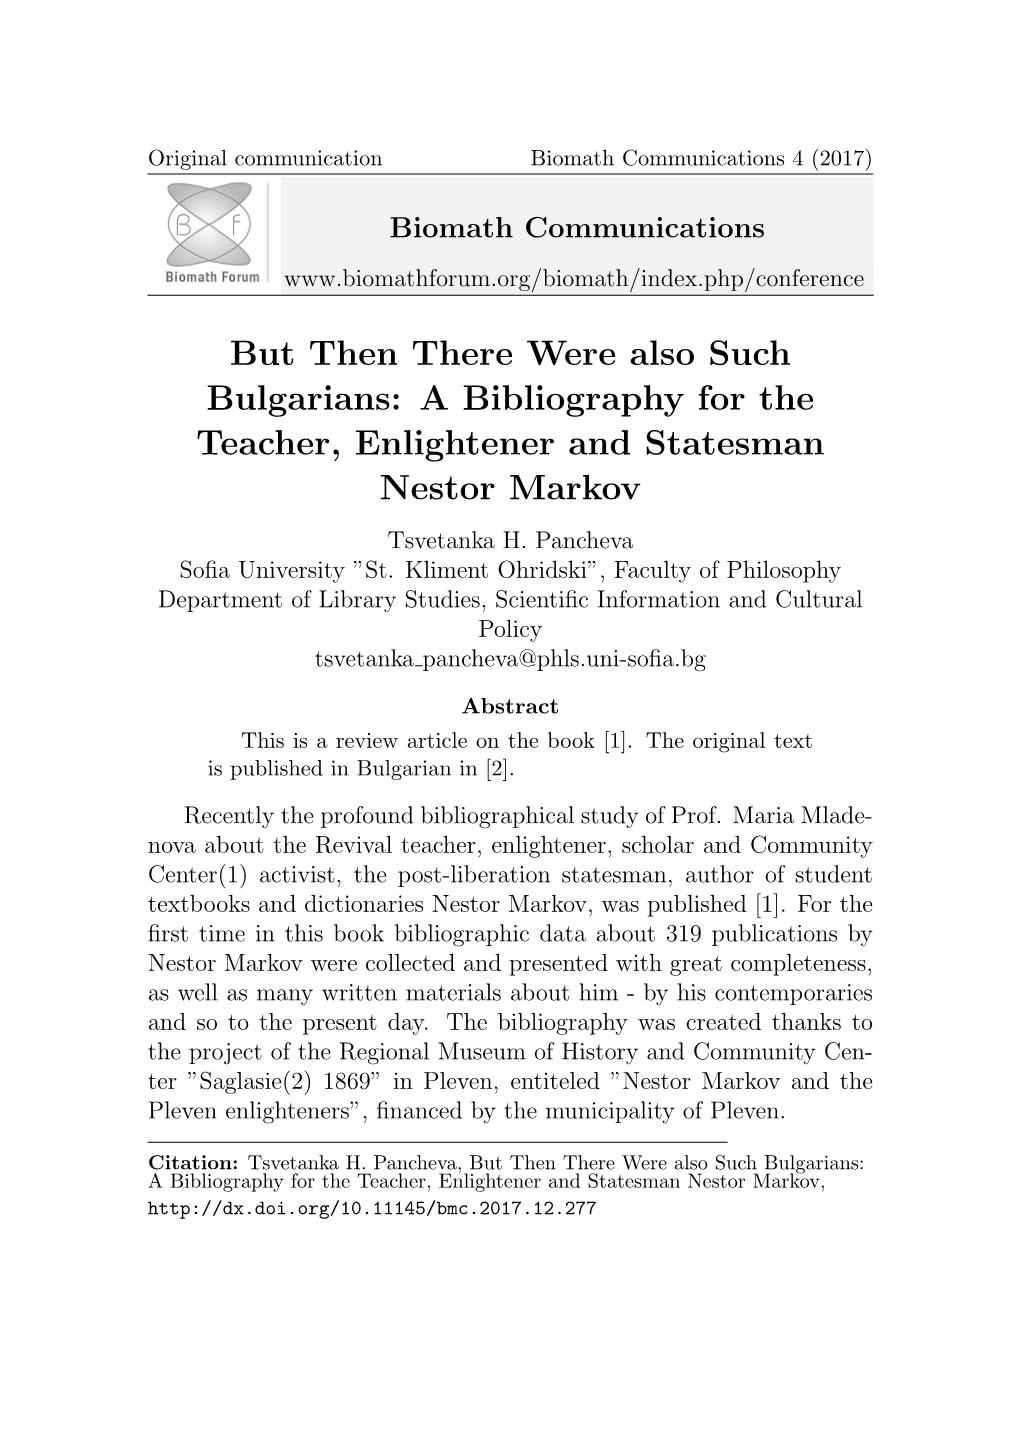 But Then There Were Also Such Bulgarians: a Bibliography for the Teacher, Enlightener and Statesman Nestor Markov Tsvetanka H